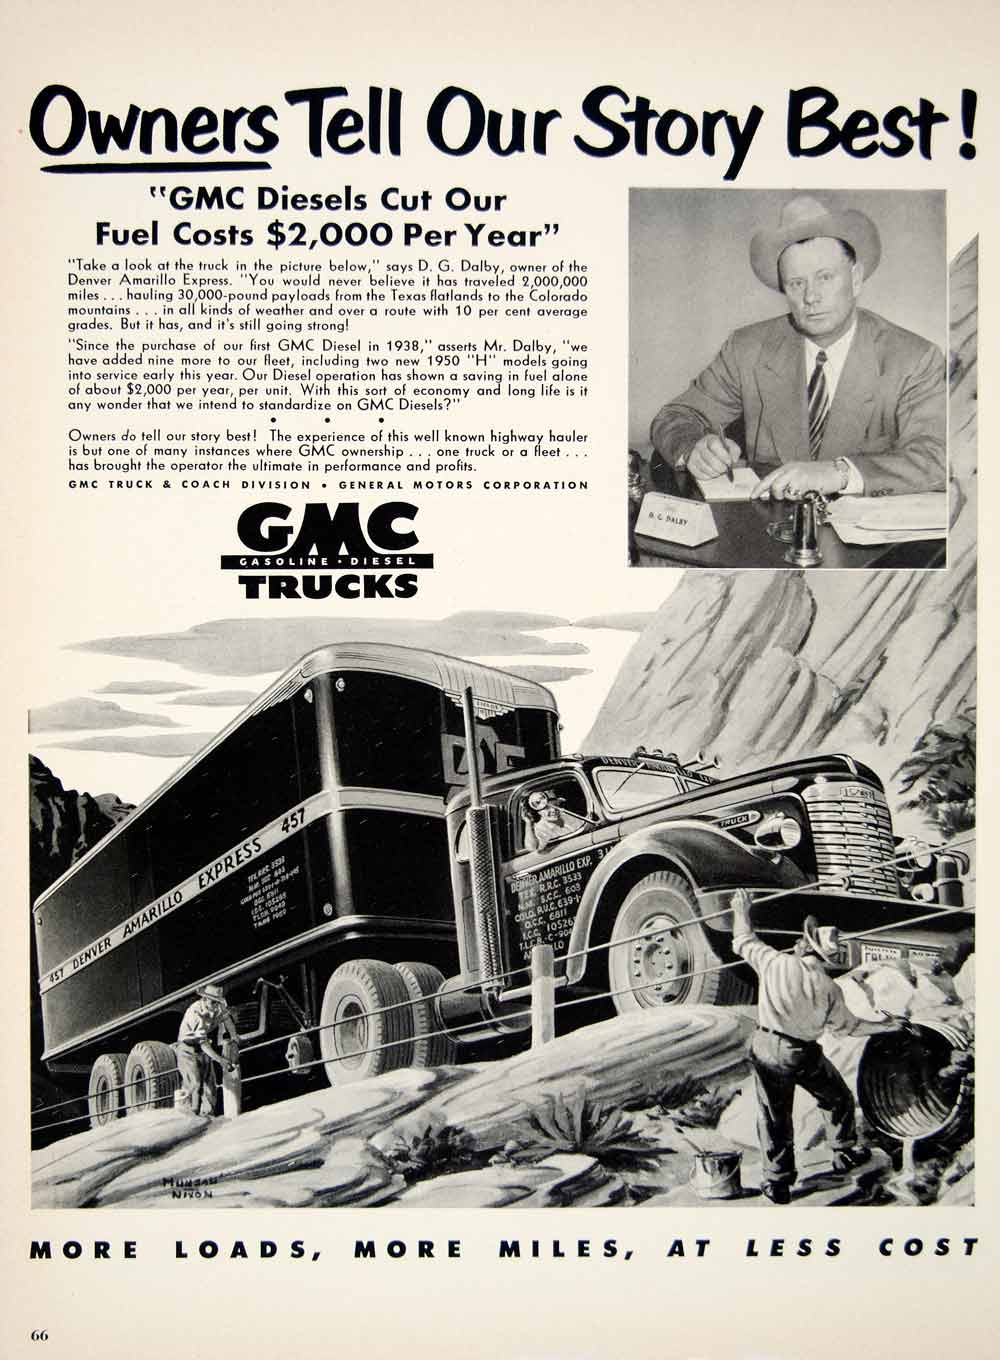 1950 Ad GMC Diesel Truck Denver Amarillo Express DG Dalby H Model Auto YFT5